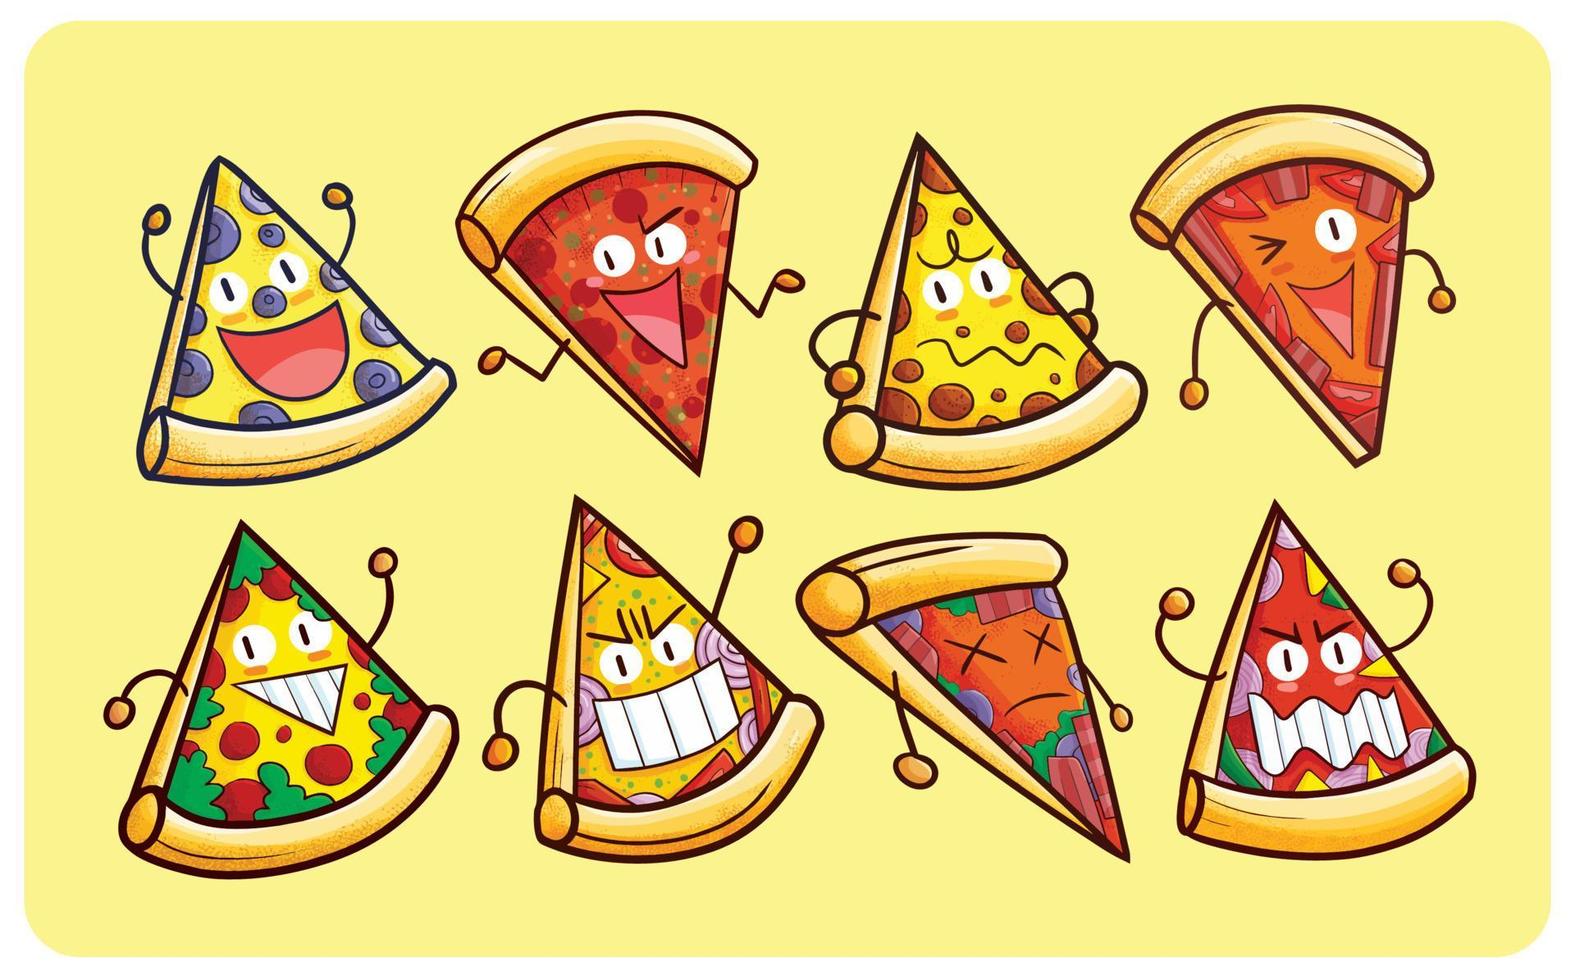 grappige en coole pizzakarakterverzameling in kawaii-stijl vector